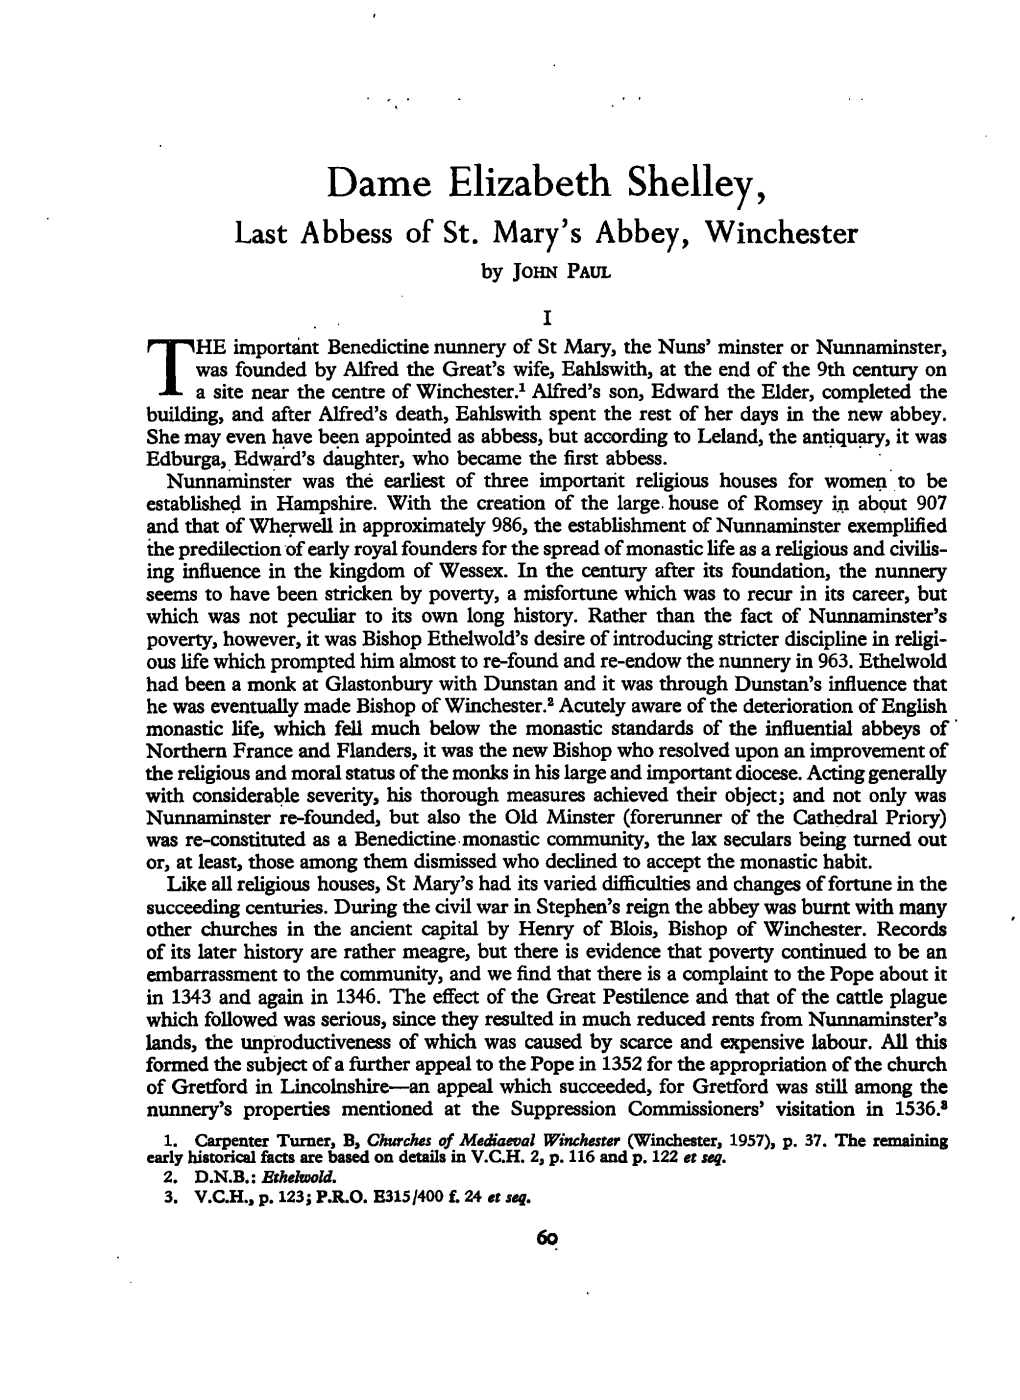 Dame Elizabeth Shelley, Last Abbess of St